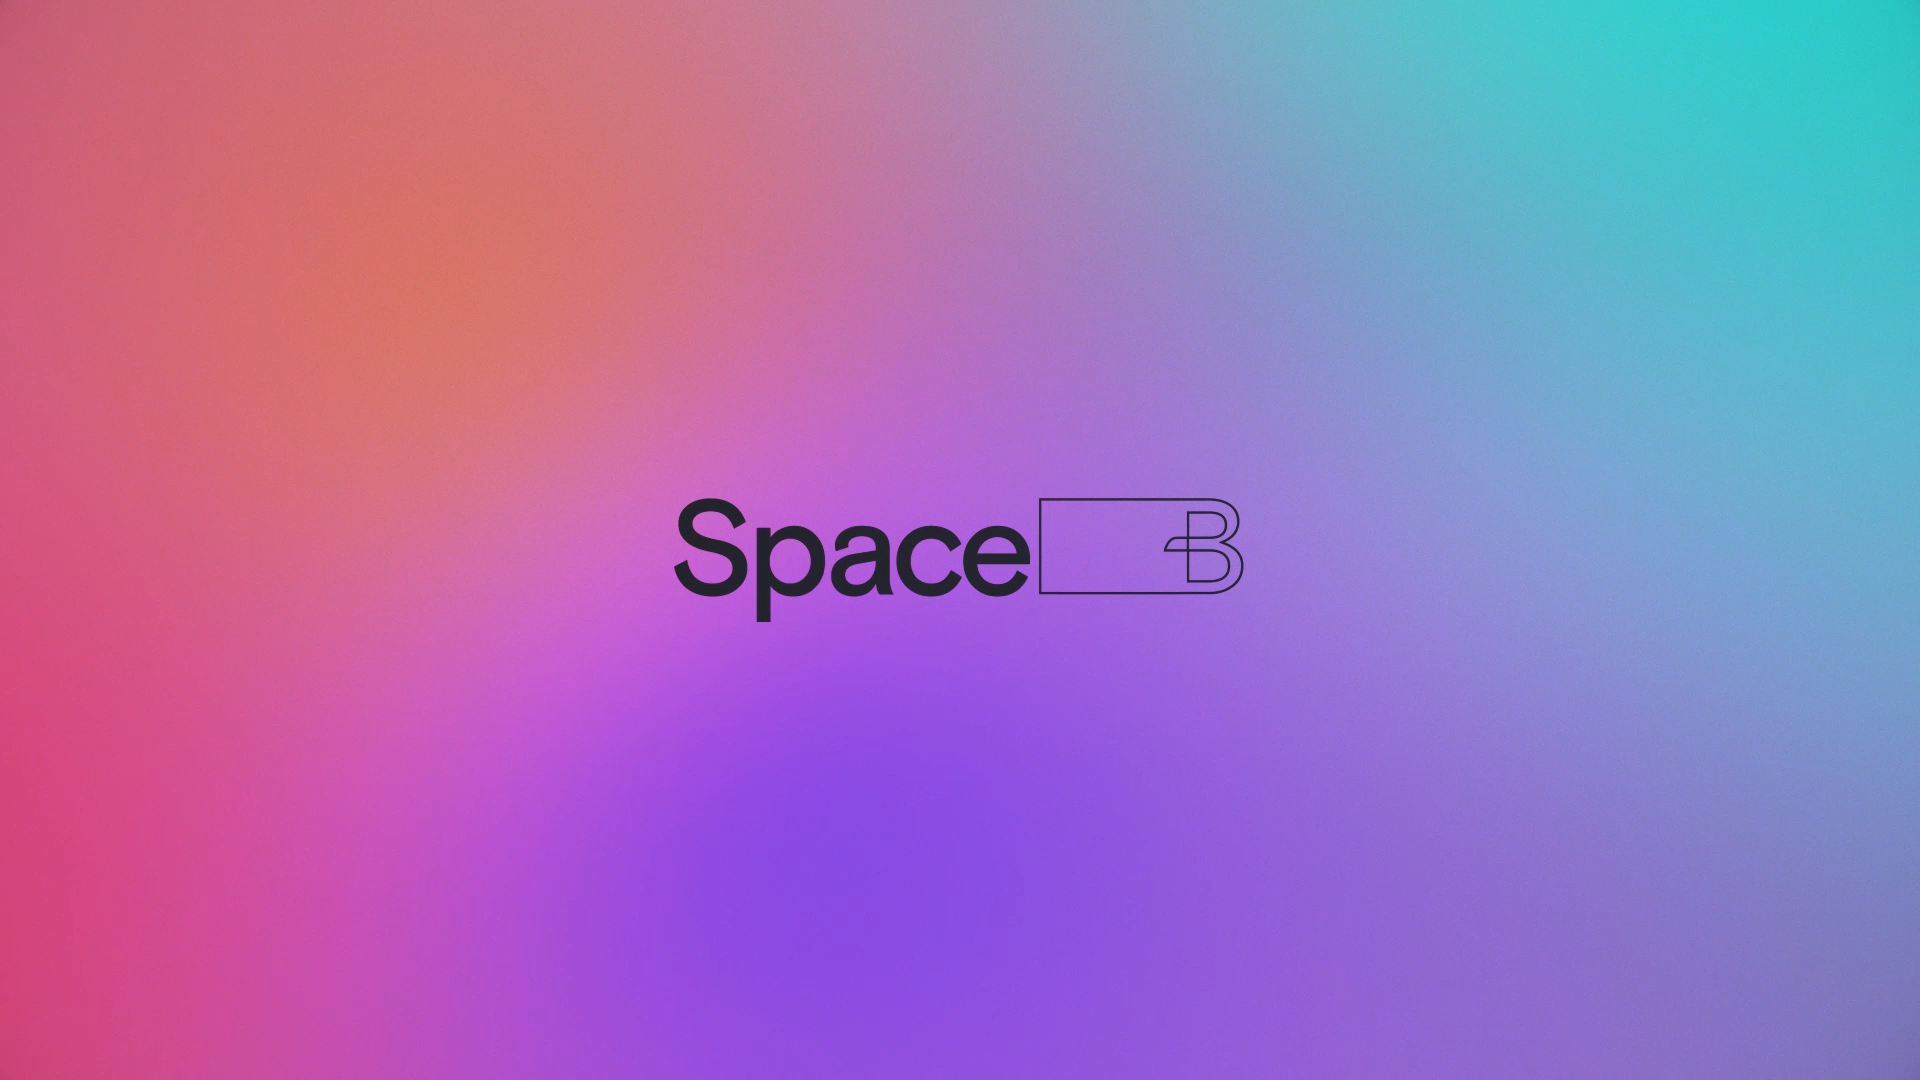 SPACE B